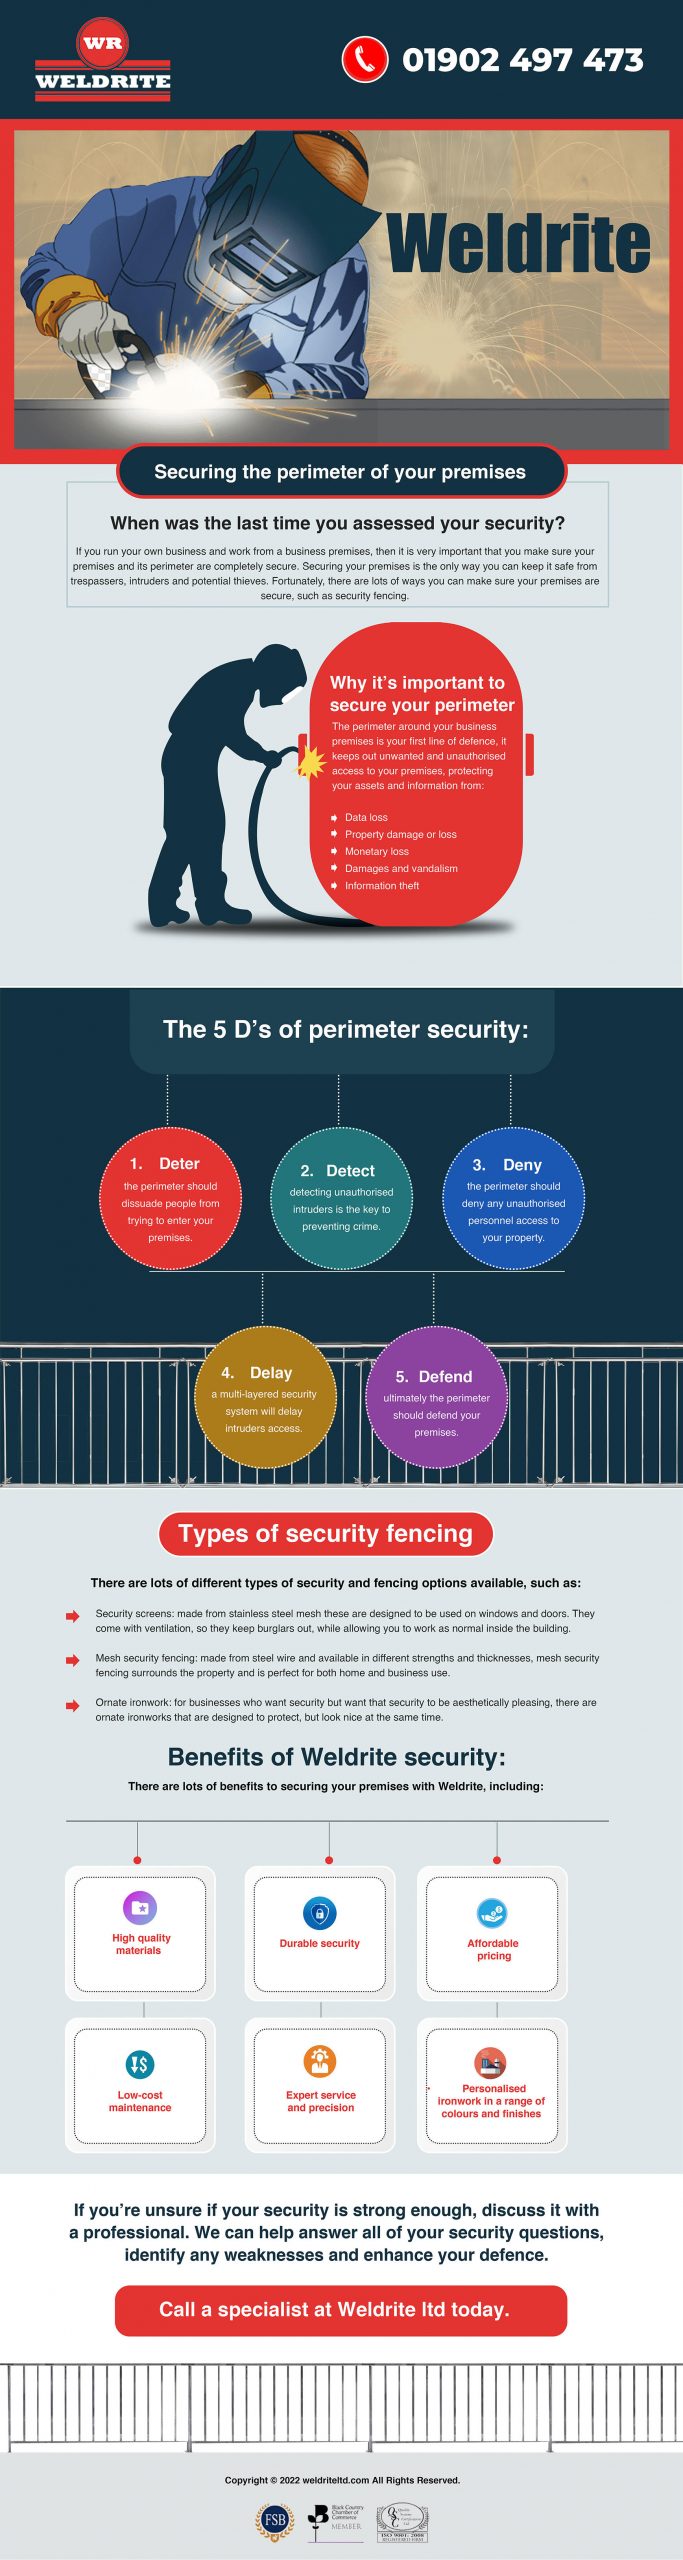 Securing the perimeter of your premises